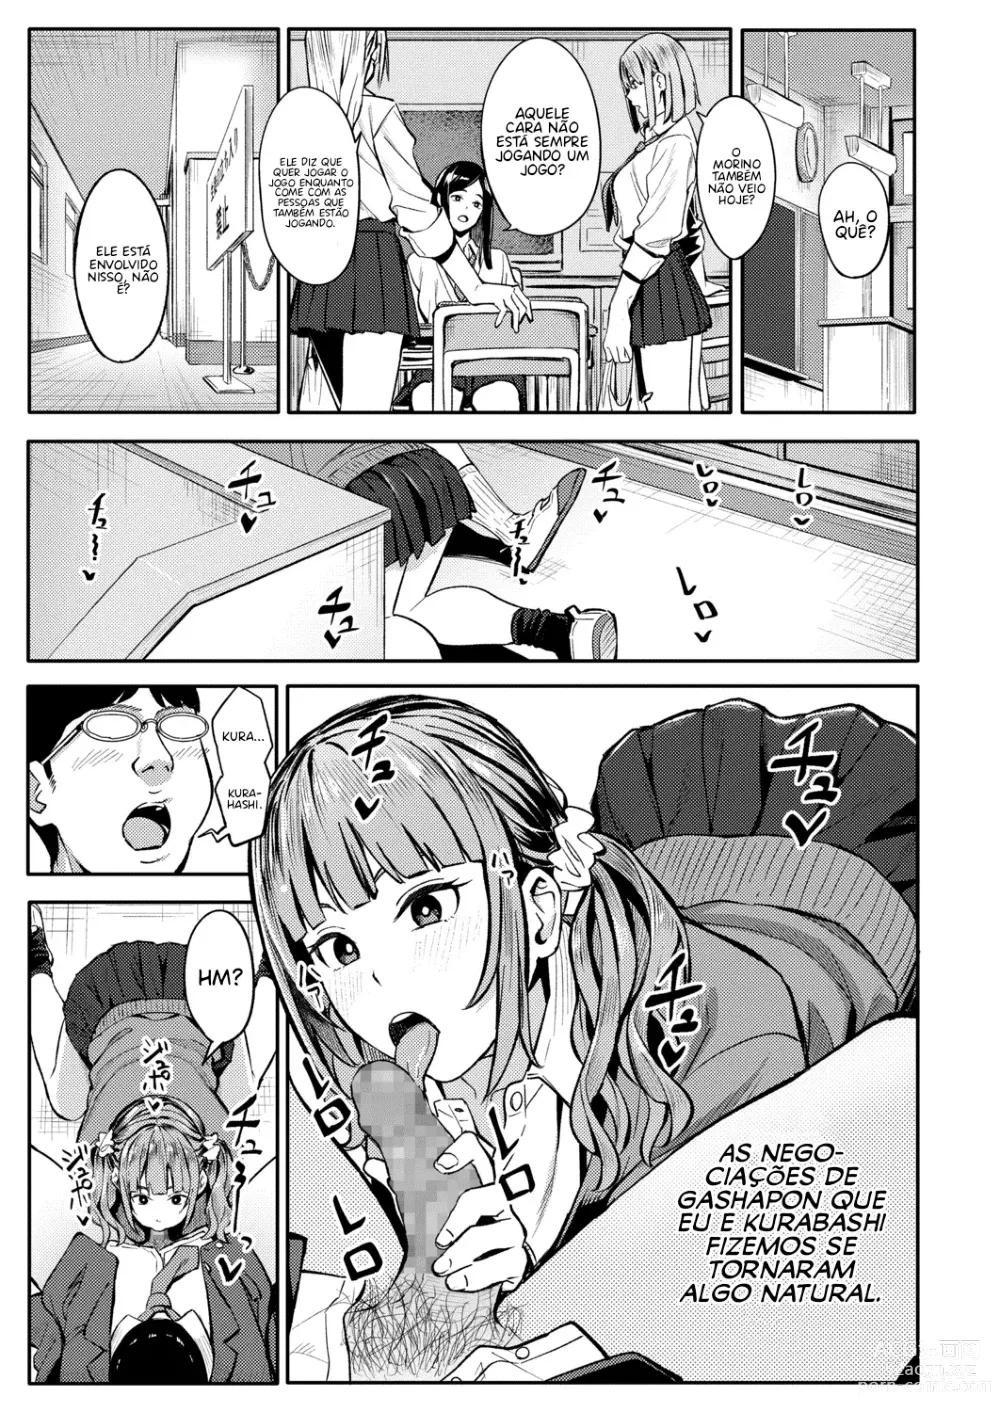 Page 11 of manga Mikaeri Gacha